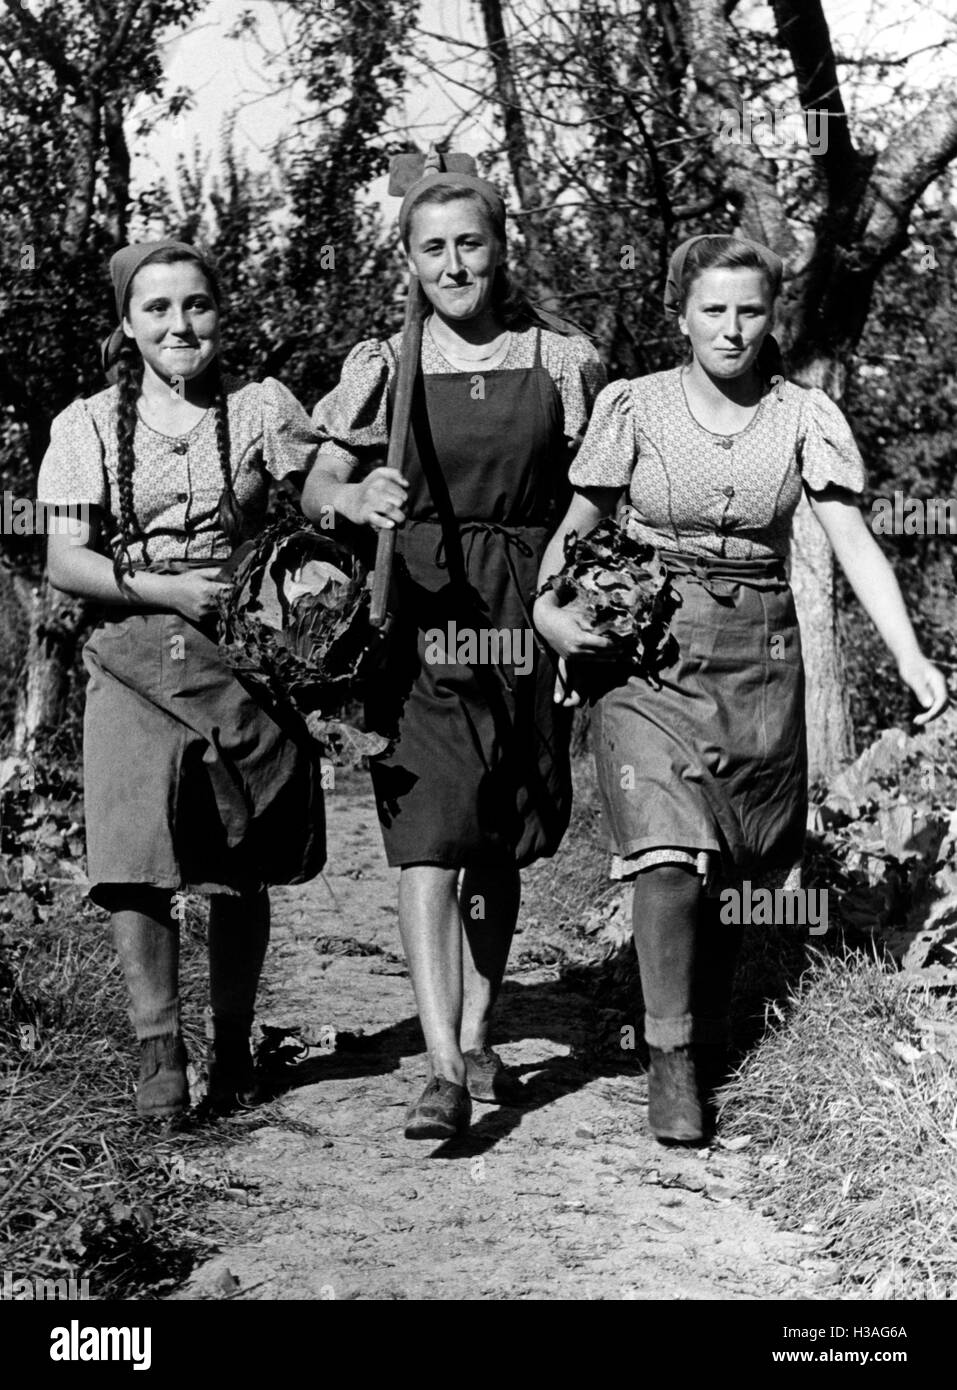 Landjahrmaedels return from the gardening, 1941 Stock Photo